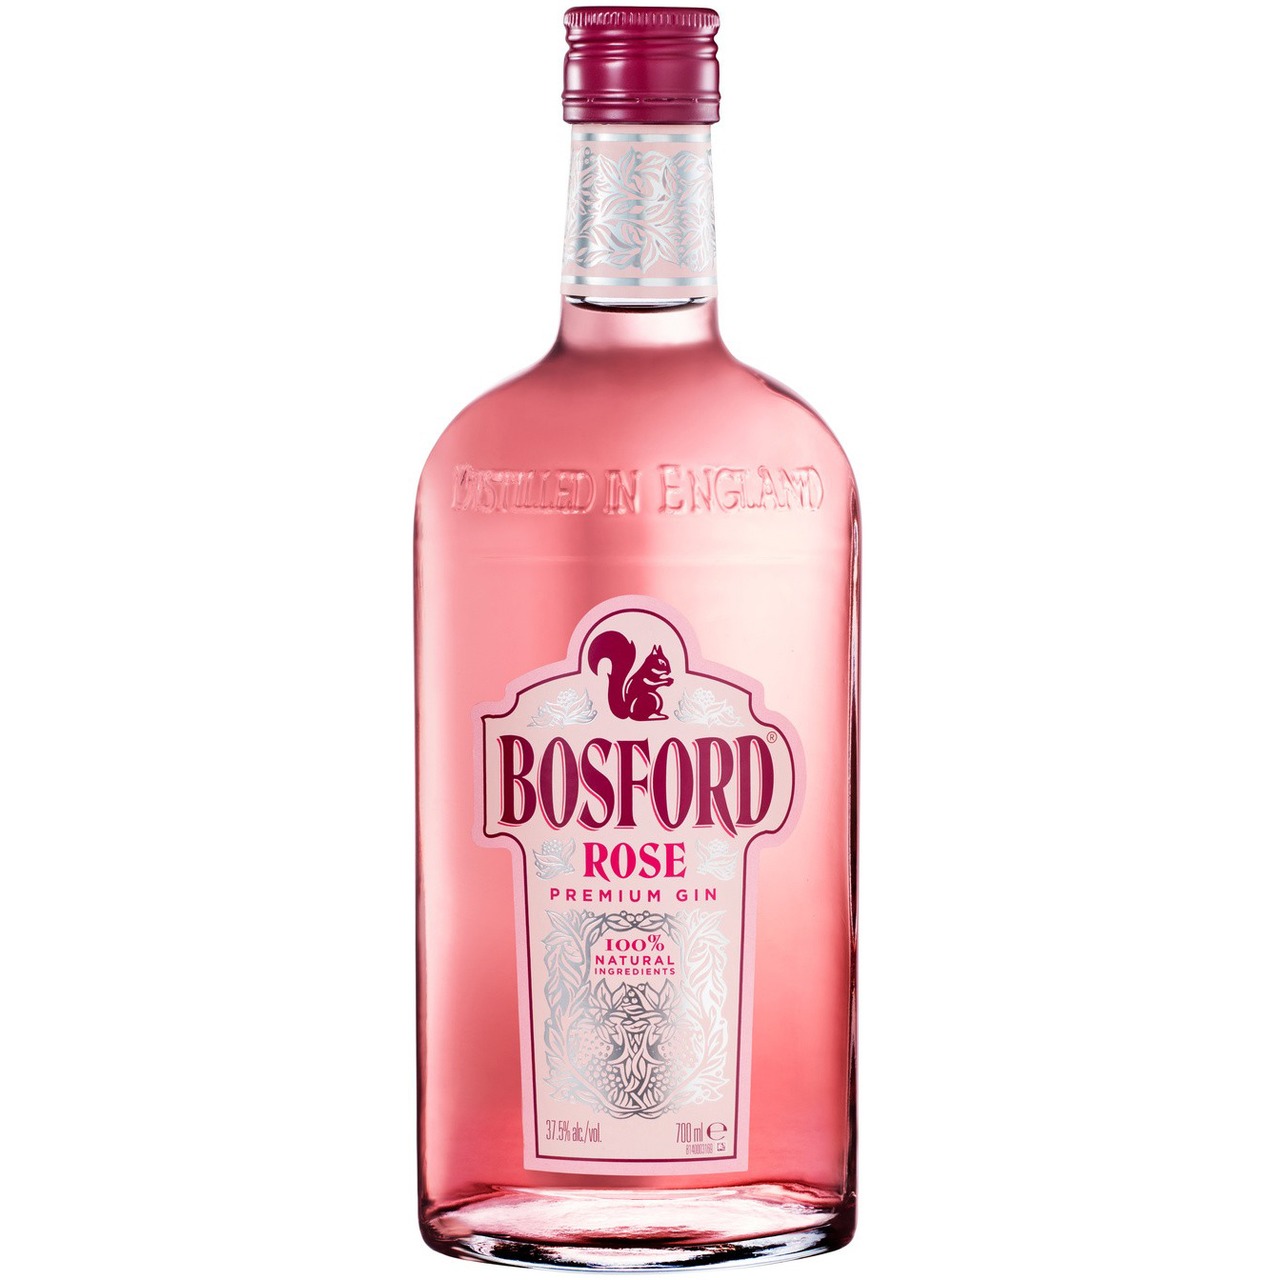 Bosford rose gin bottle lamp